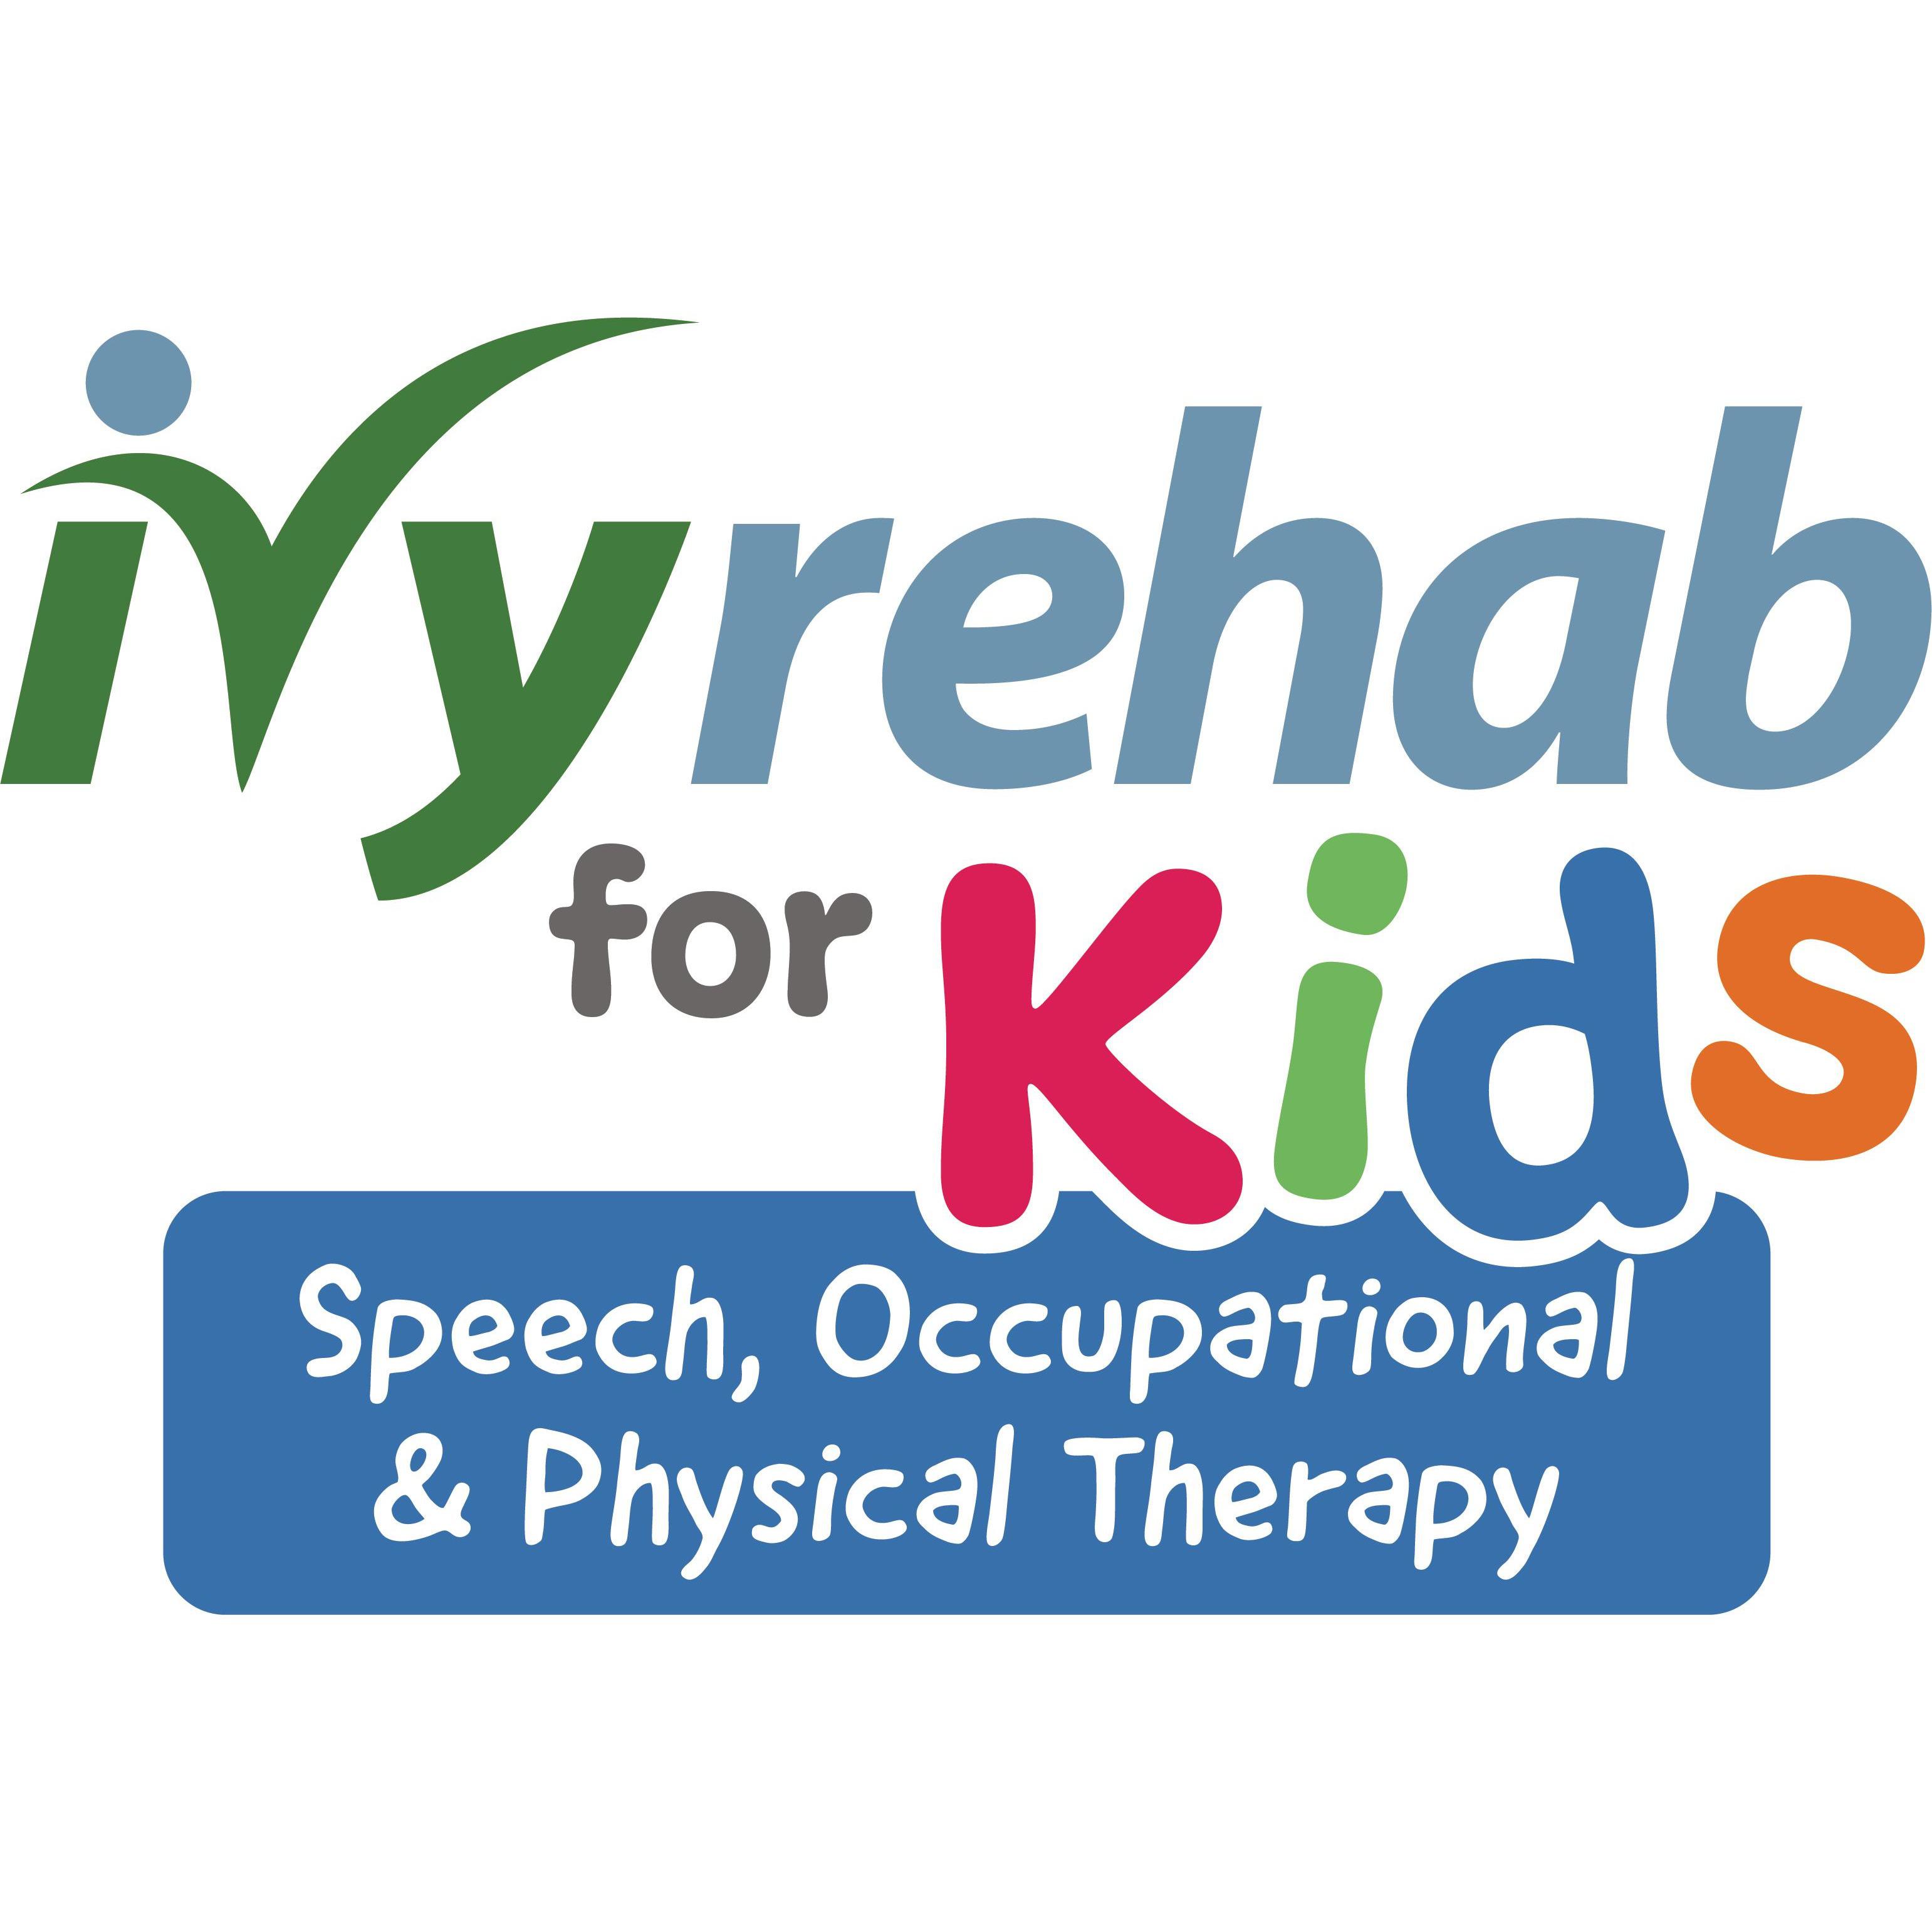 Ivy Rehab for Kids